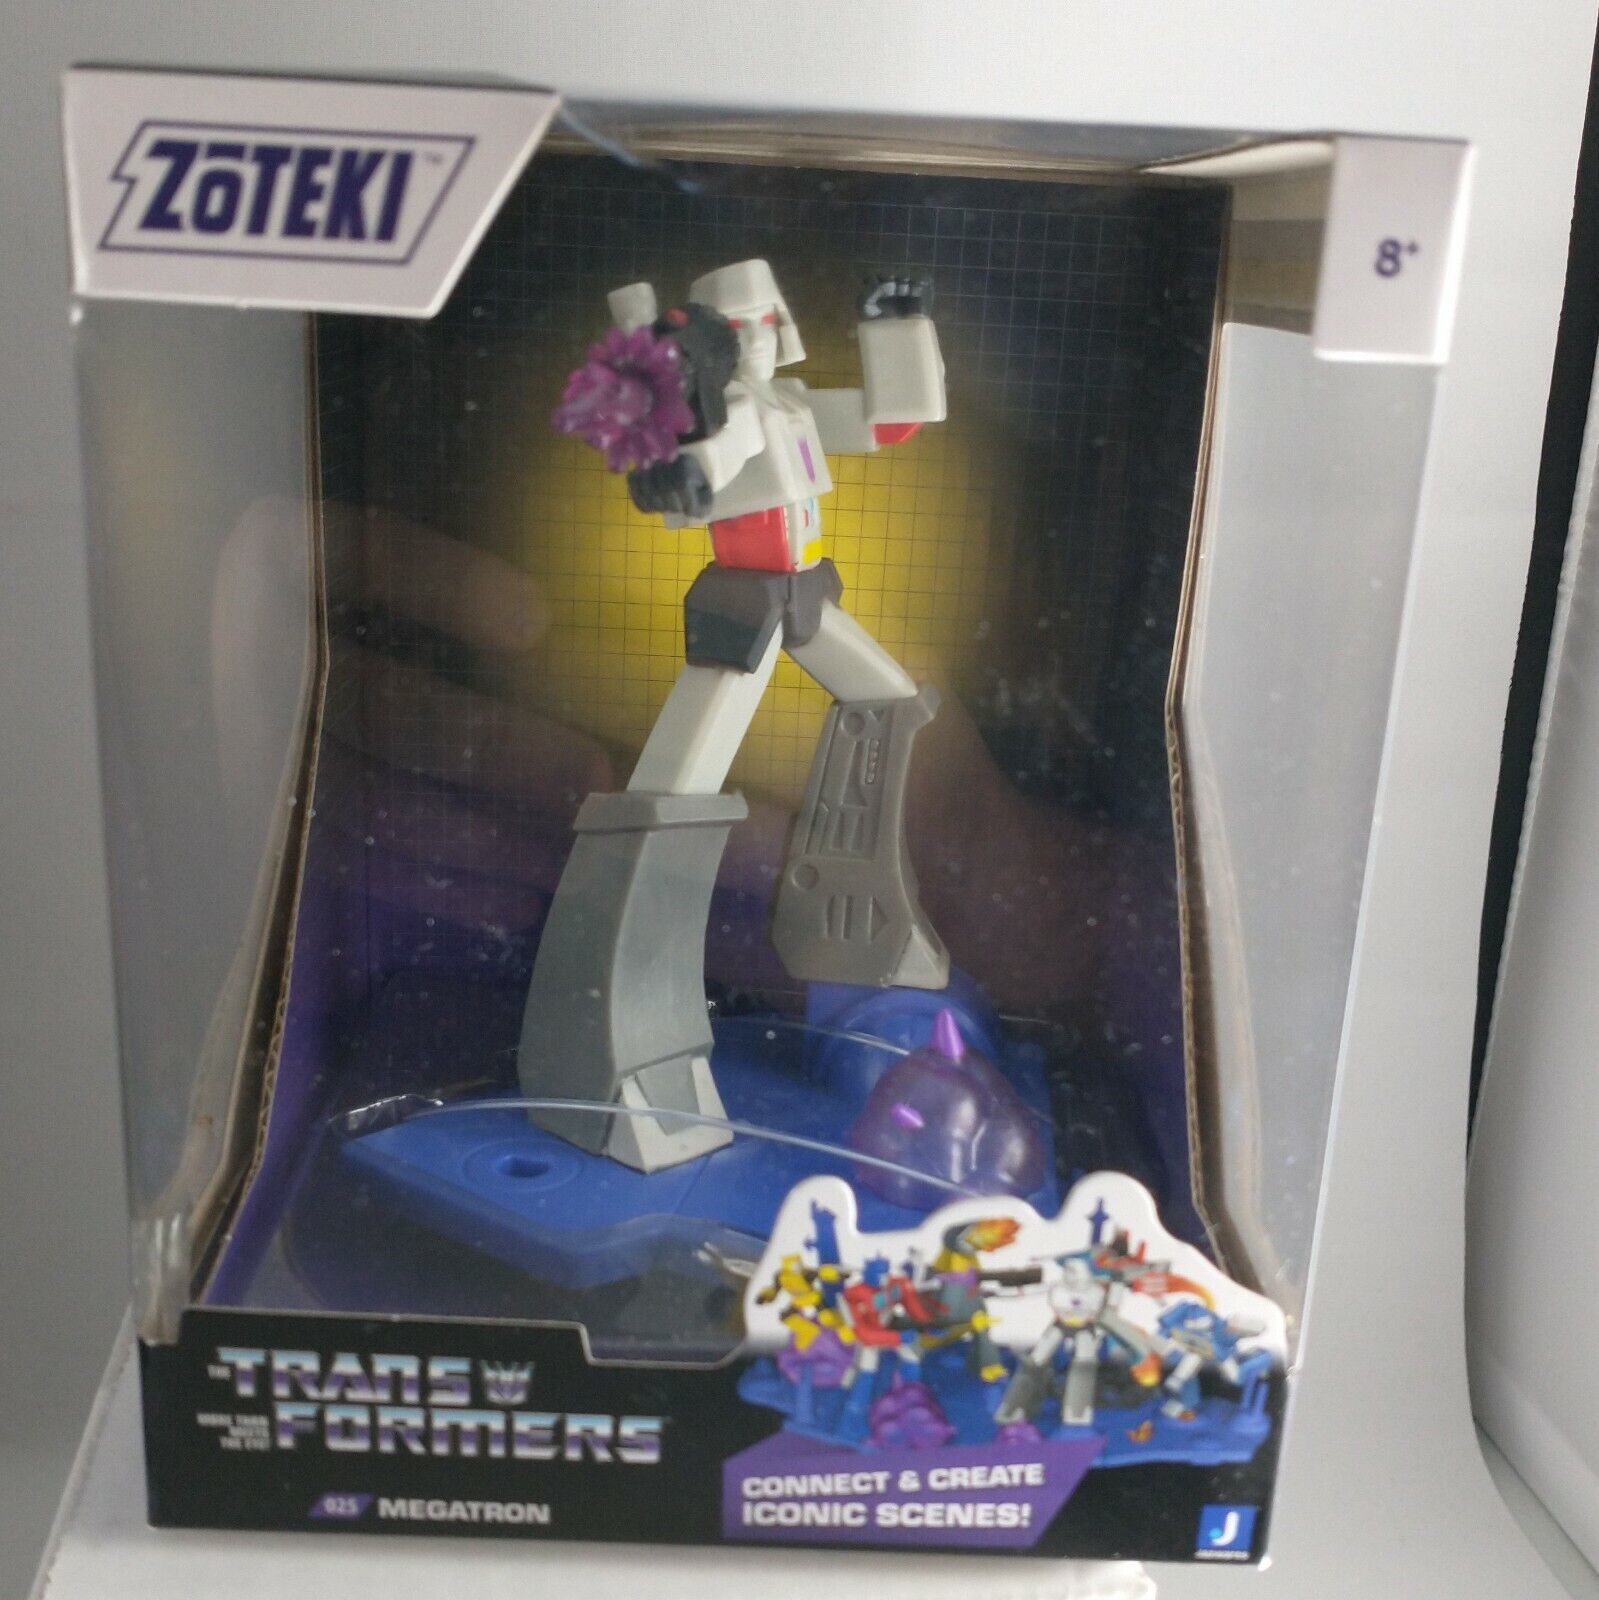 Primary image for MEGATRON Jazwares Zoteki Transformers Diorama Figure NEW IN BOX